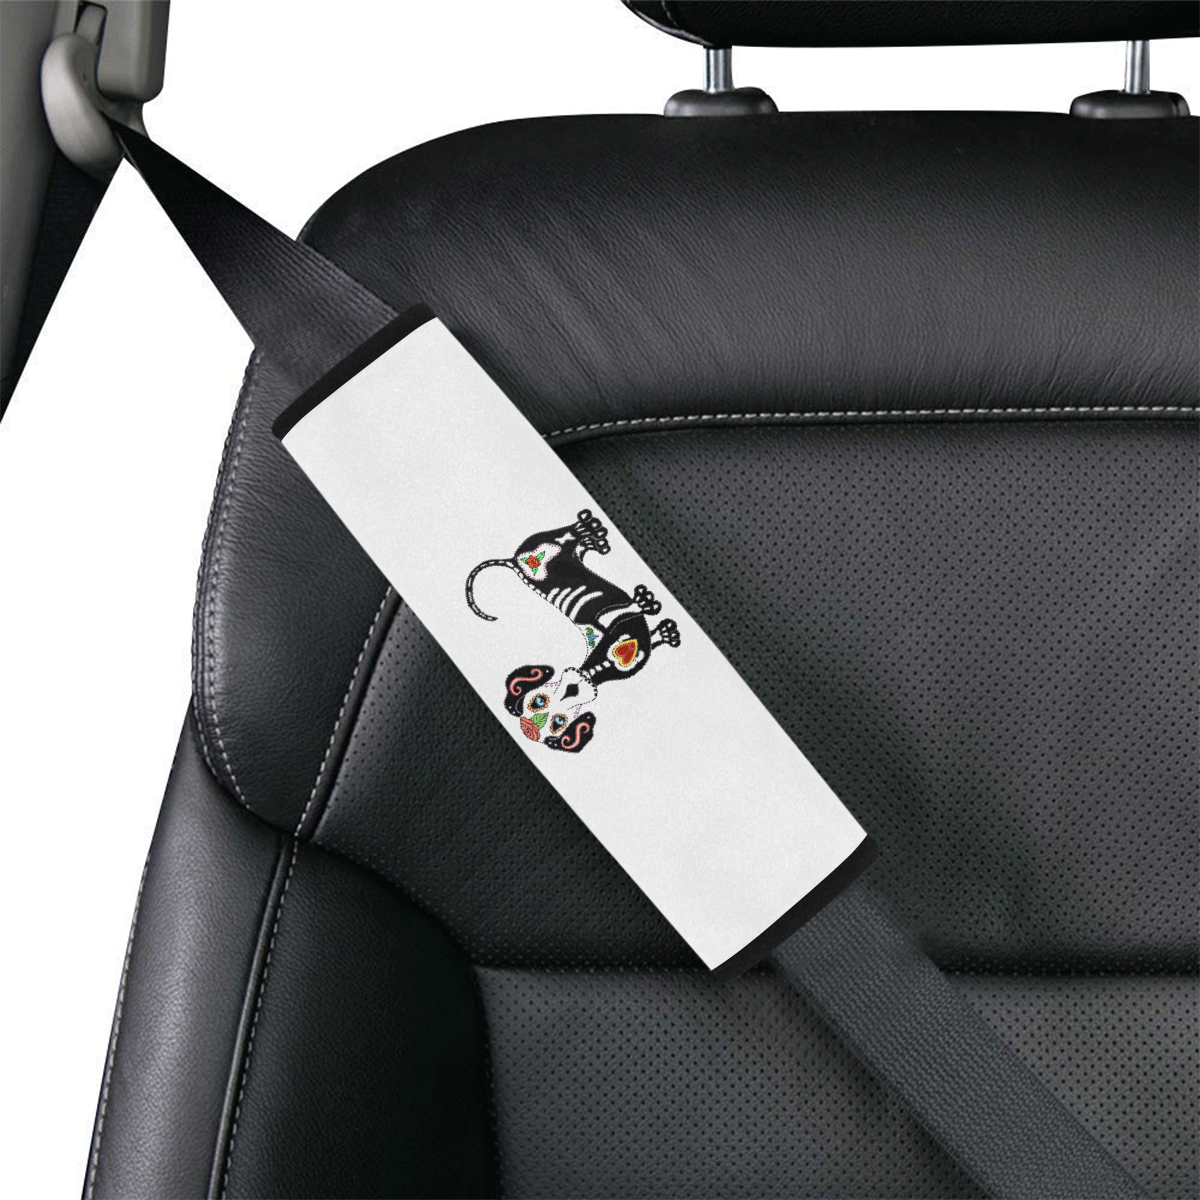 Dachshund Sugar Skull White Car Seat Belt Cover 7''x8.5''